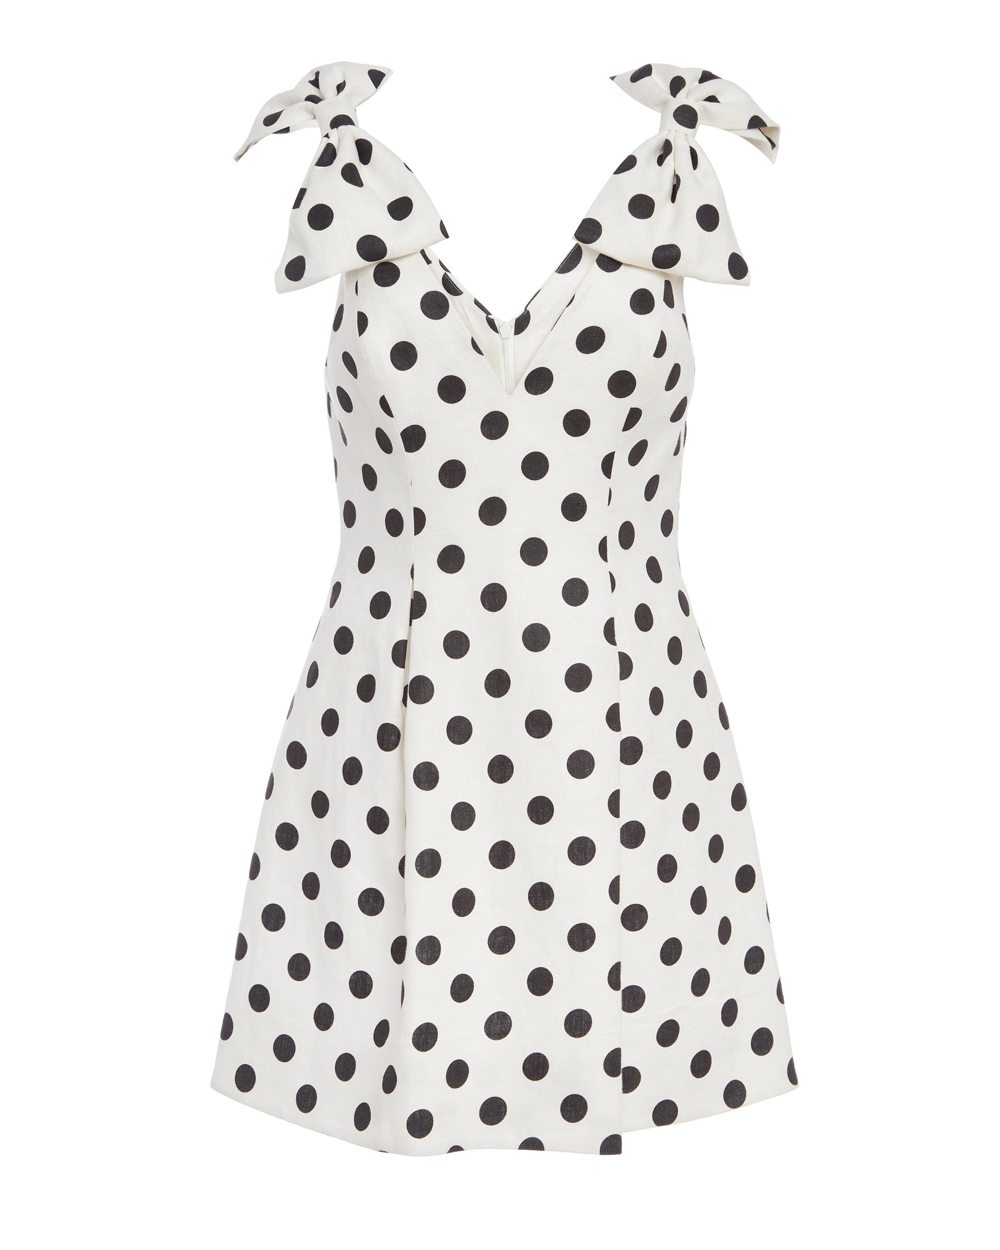 Zimmermann polka dot dress, $650 USD from Moda Operandi